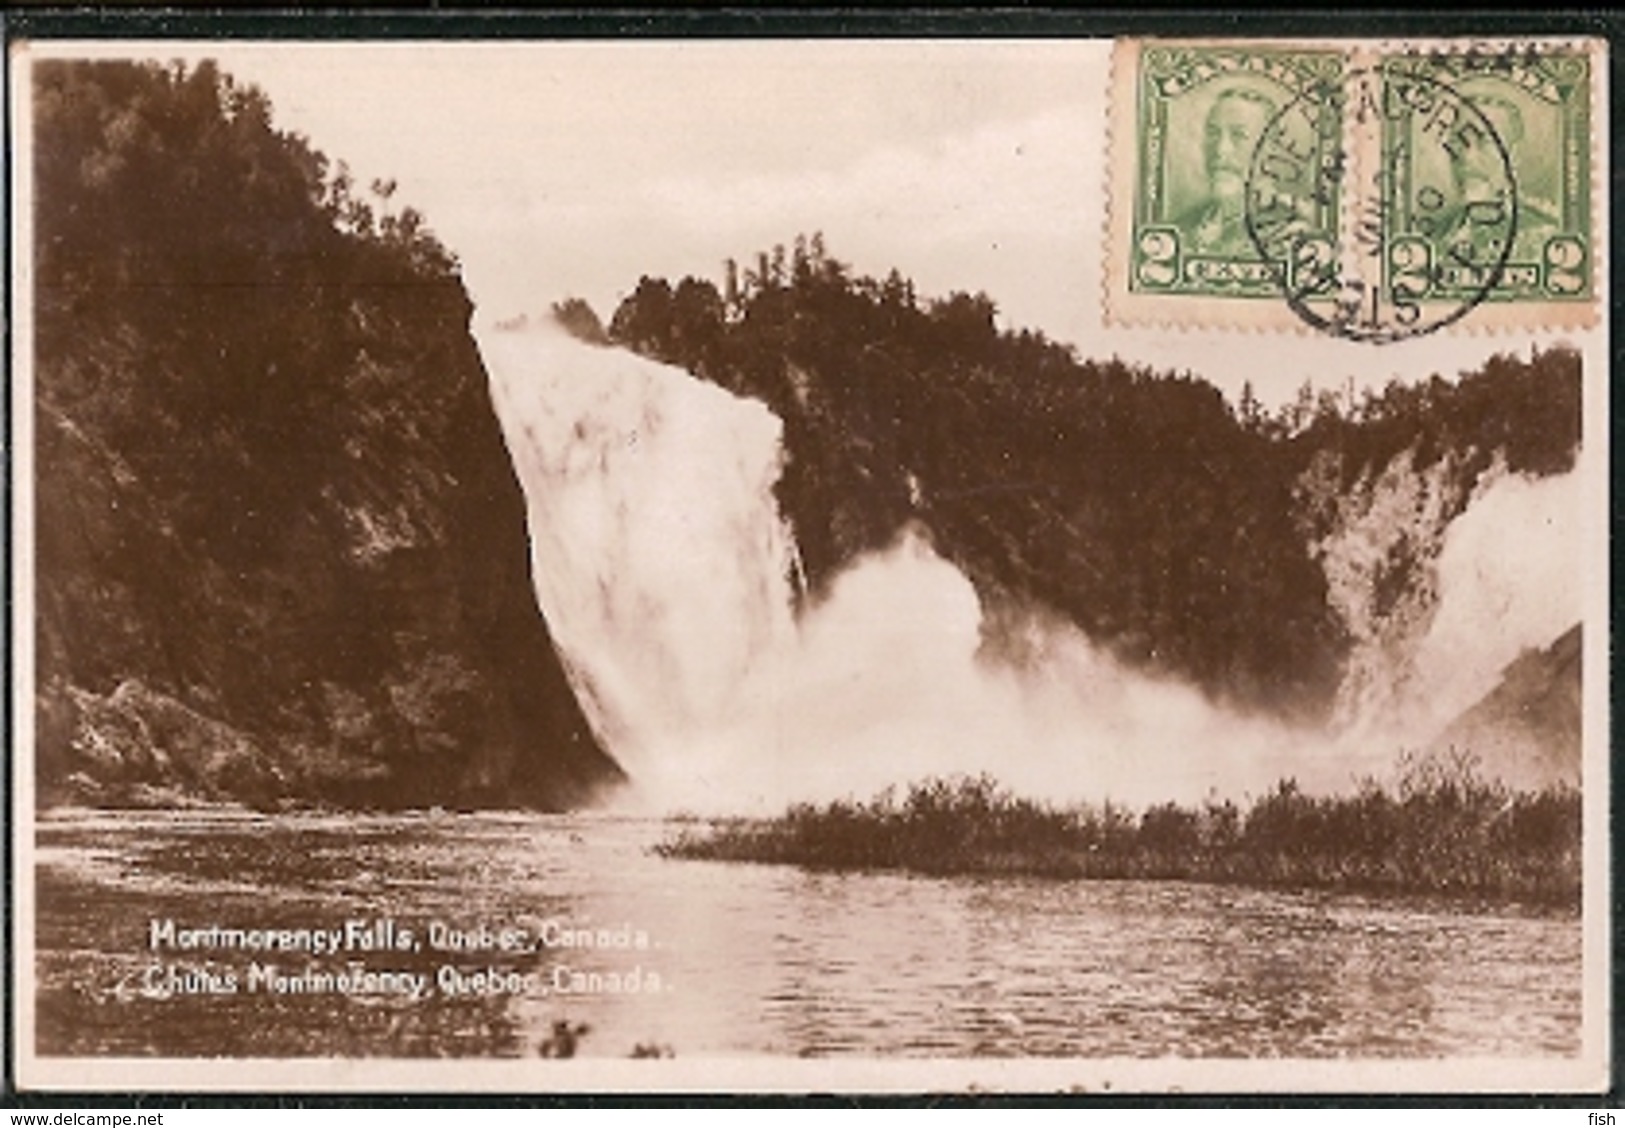 Canada & Ciculated, Montmorency Falls, La Côte-de-Beaupré, Porto Portugal 1930 (6671) - Chutes Montmorency